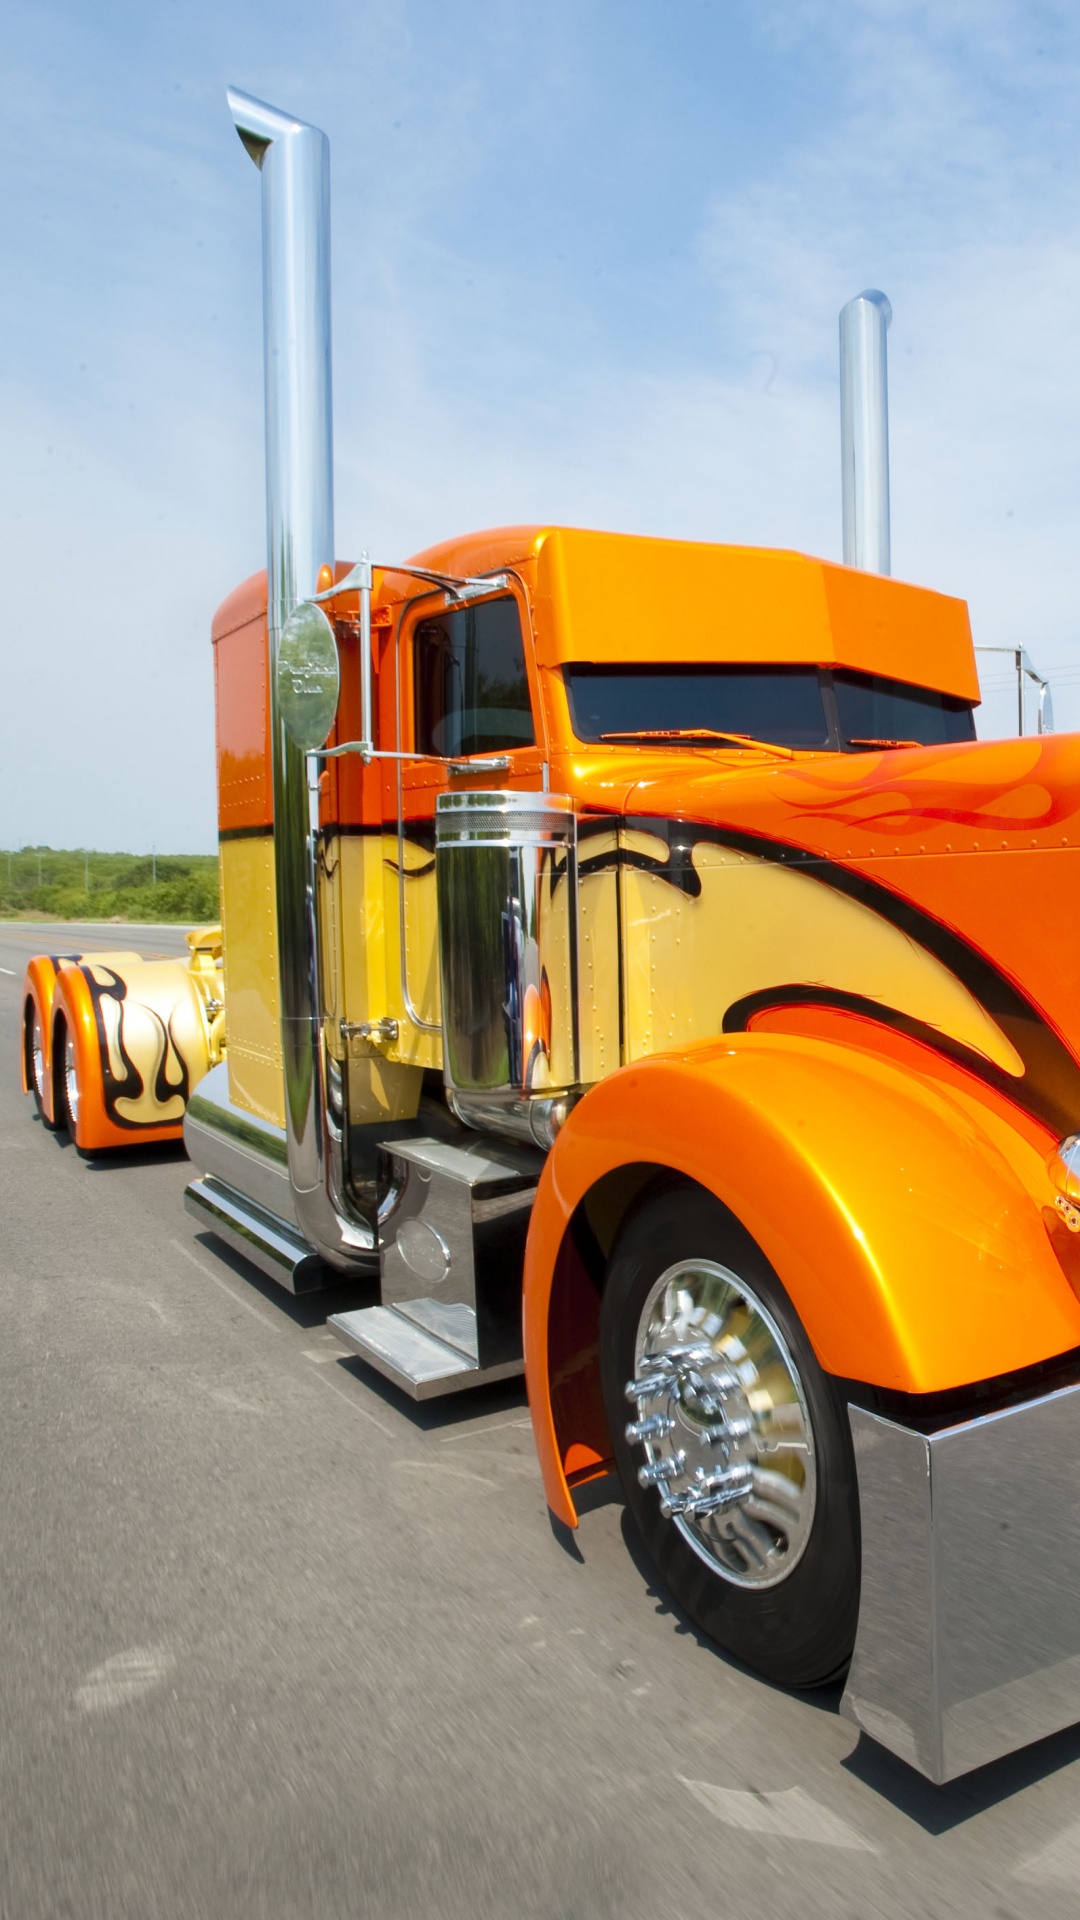 Orange Truck on Road During Daytime. Wallpaper in 1080x1920 Resolution